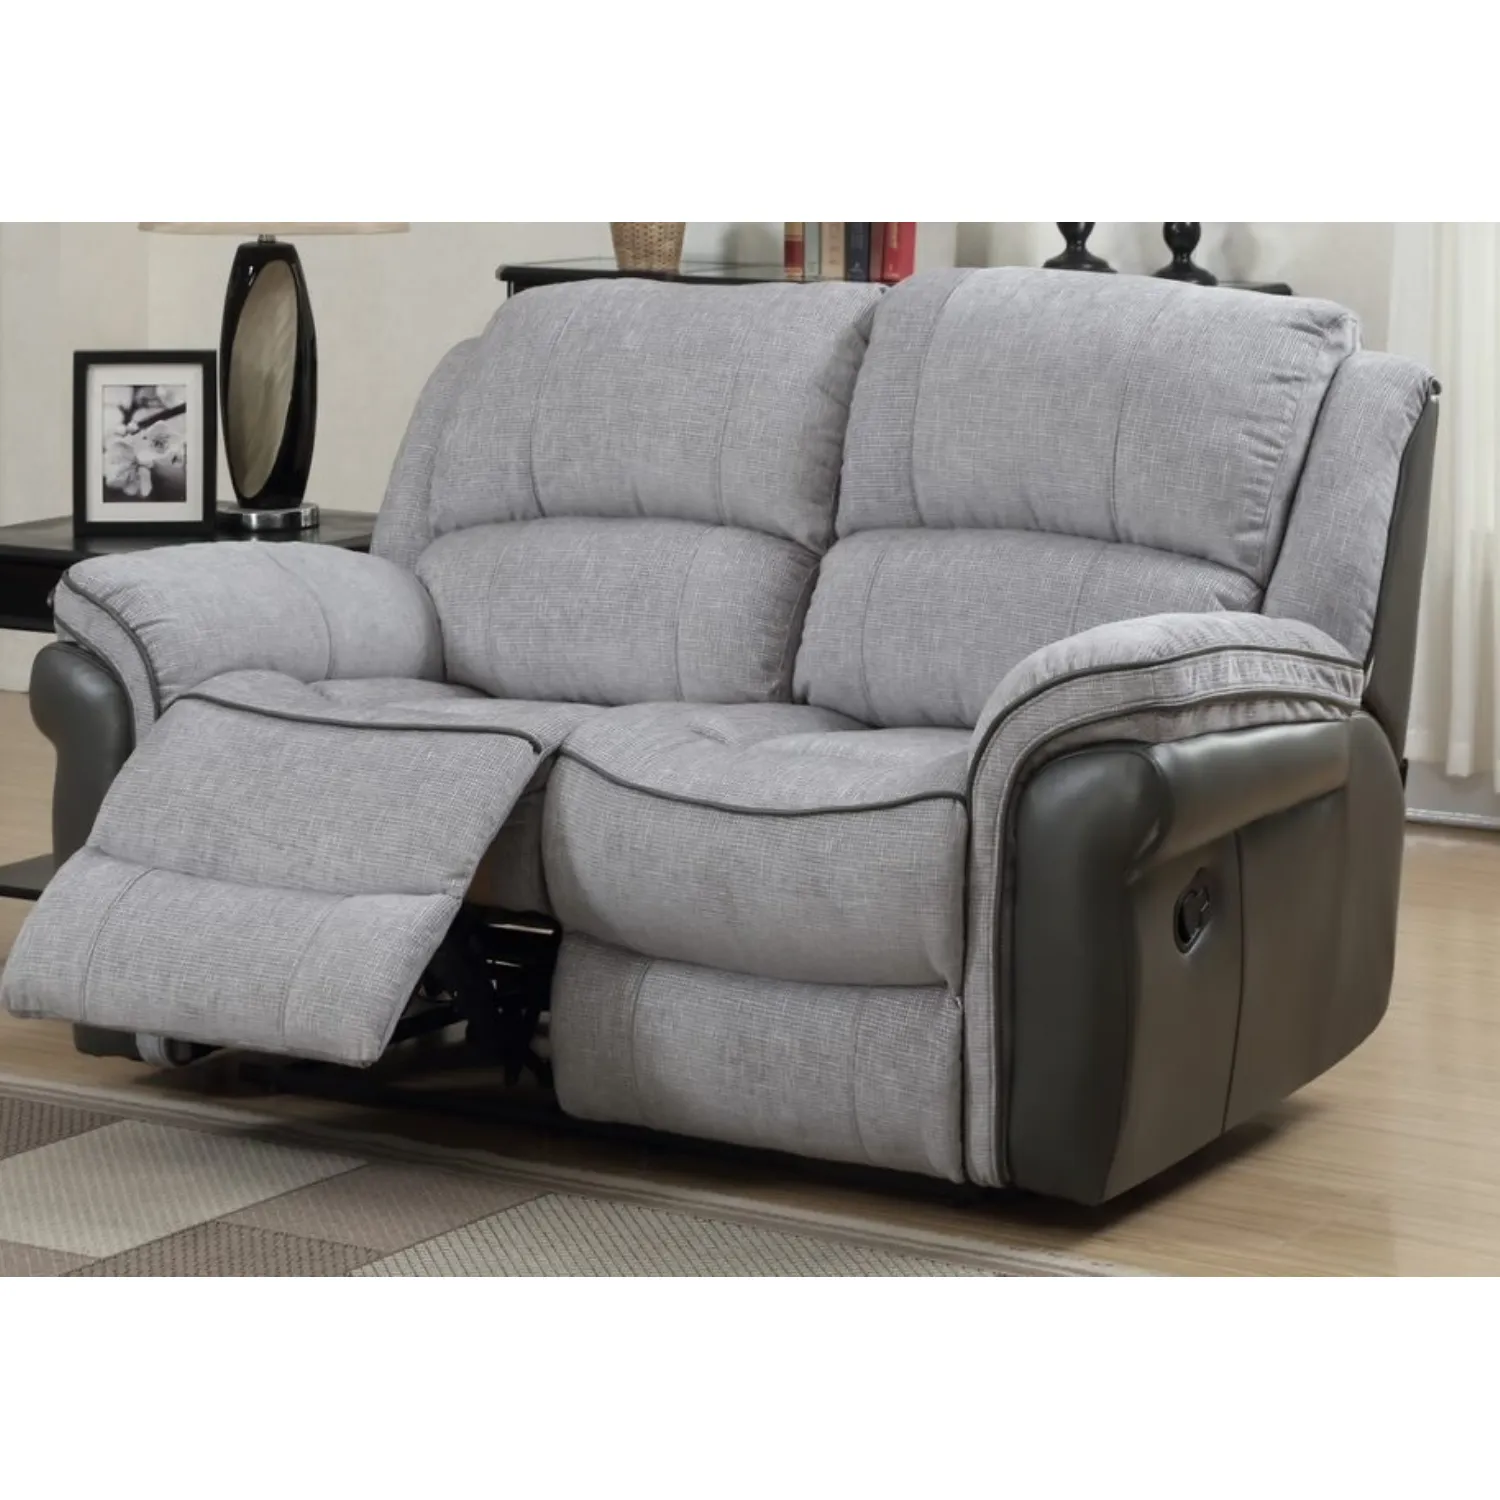 Grey Fabric Grey Leather 2 Seat Manual Recliner Sofa